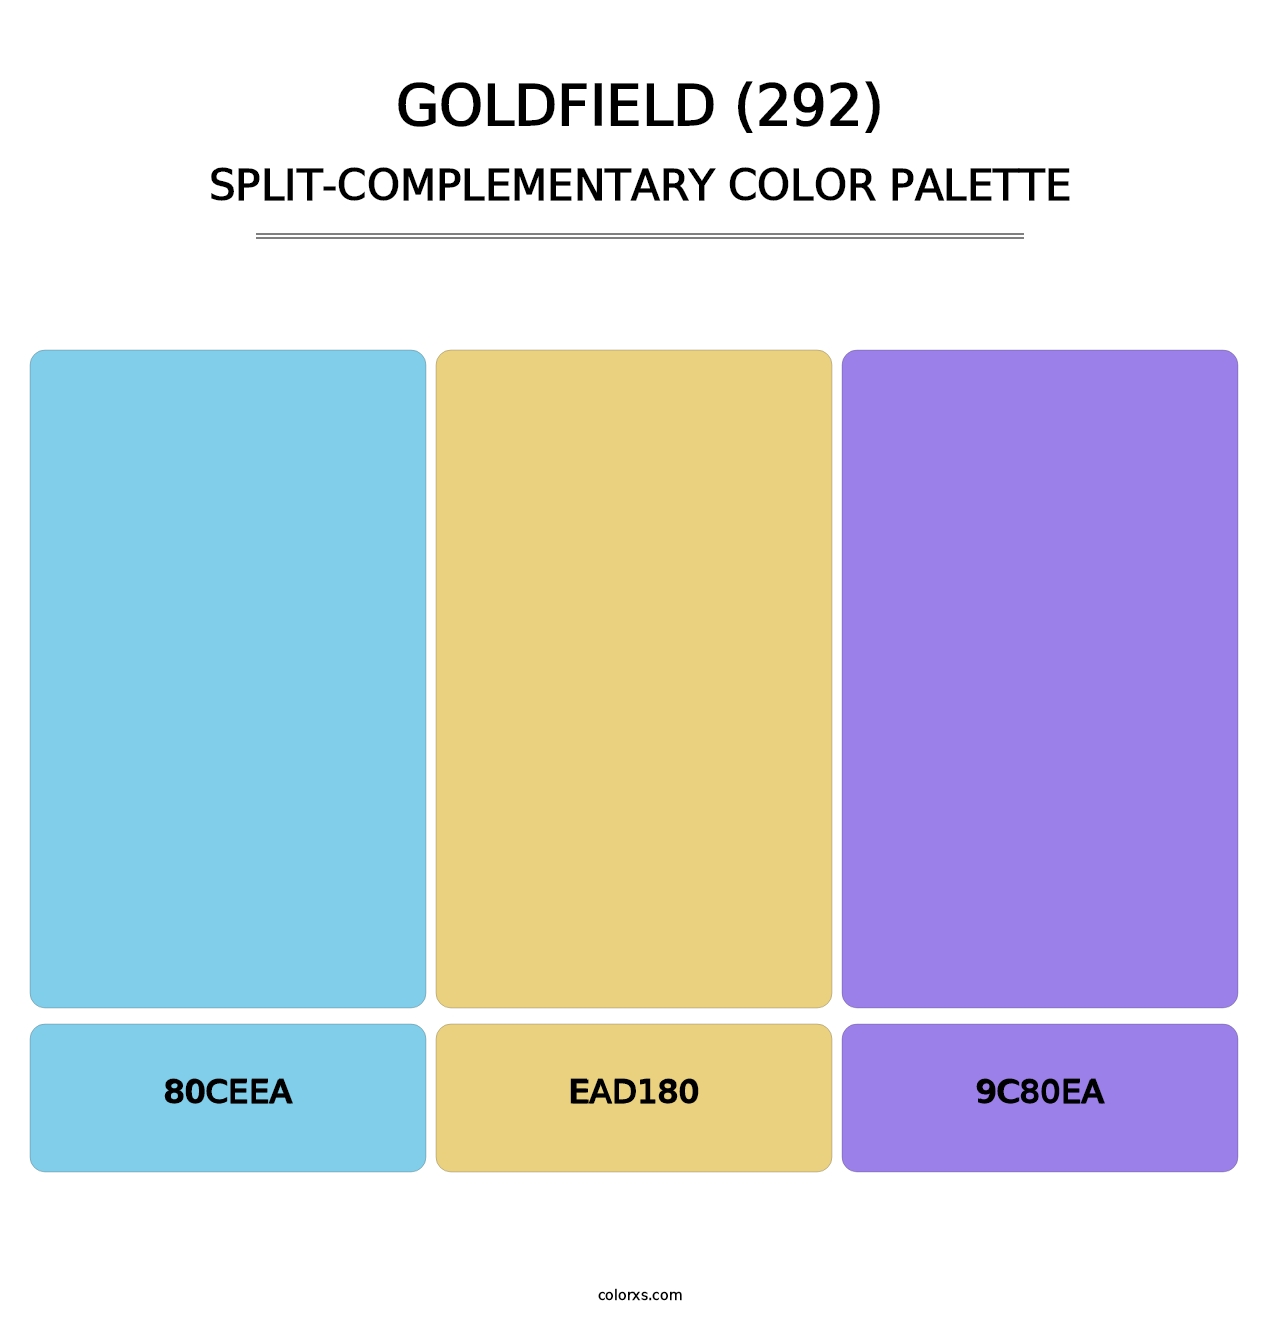 Goldfield (292) - Split-Complementary Color Palette